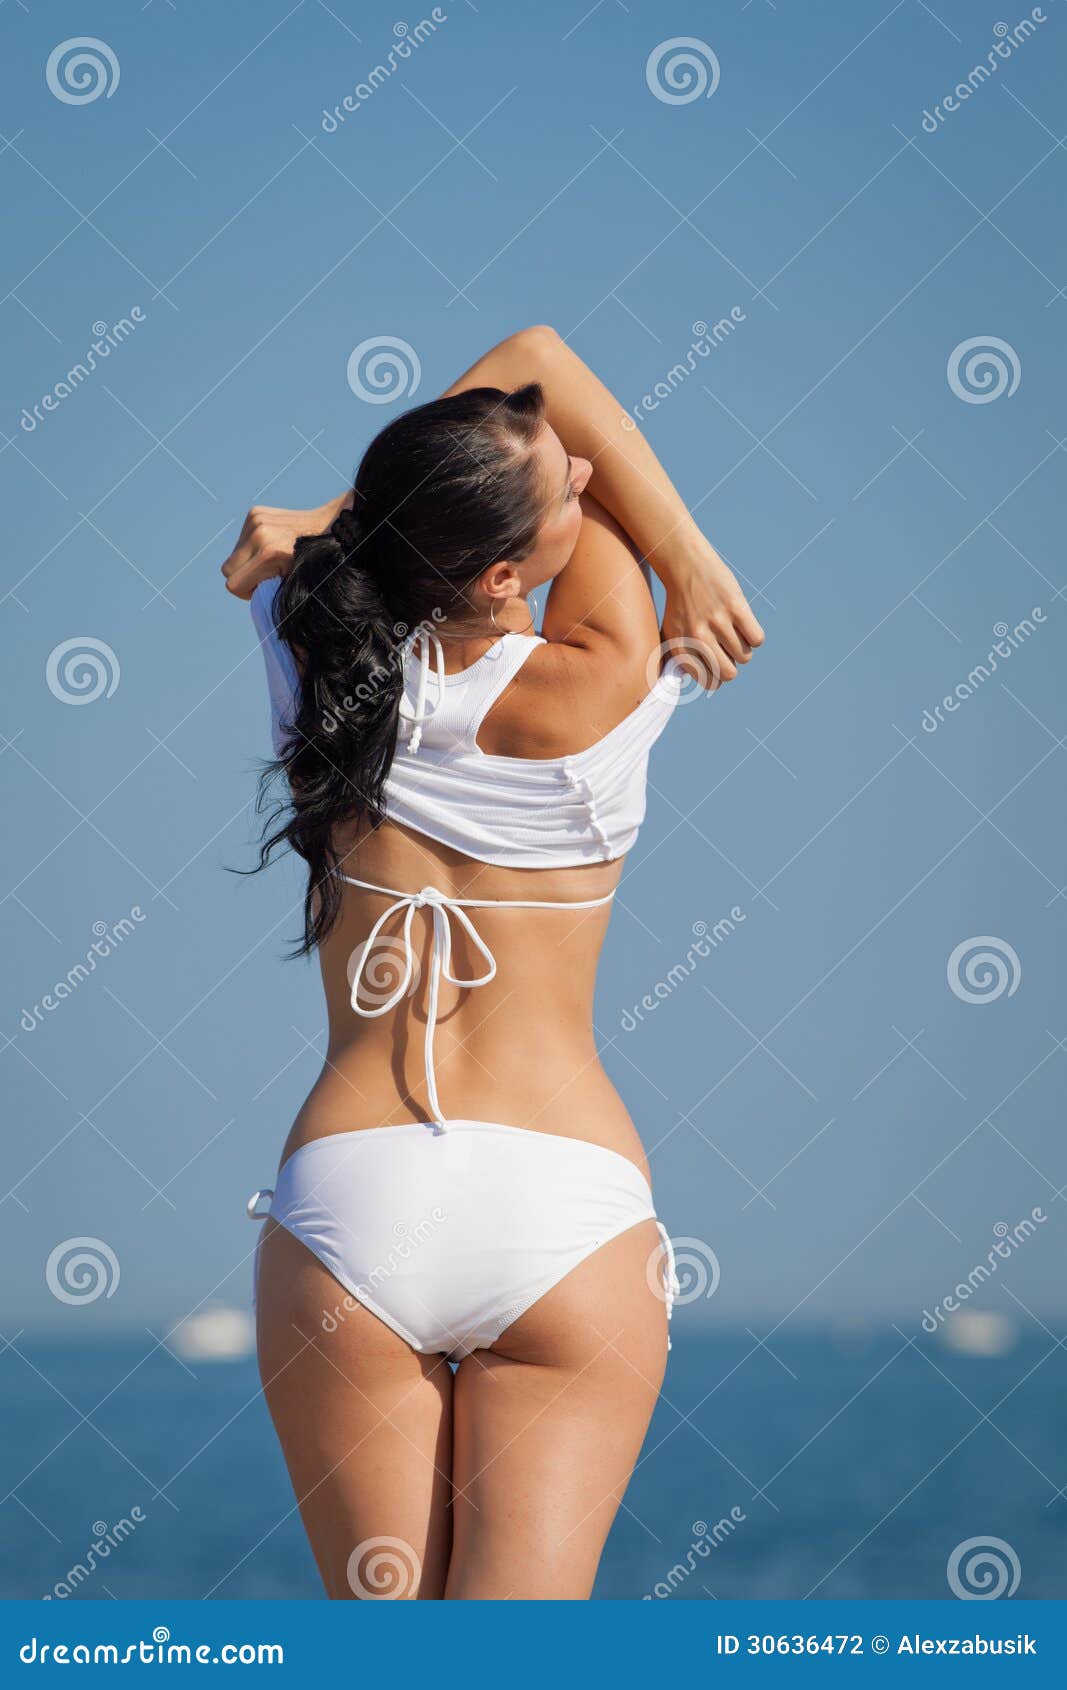 182 Bikini Undressing Stock Photos